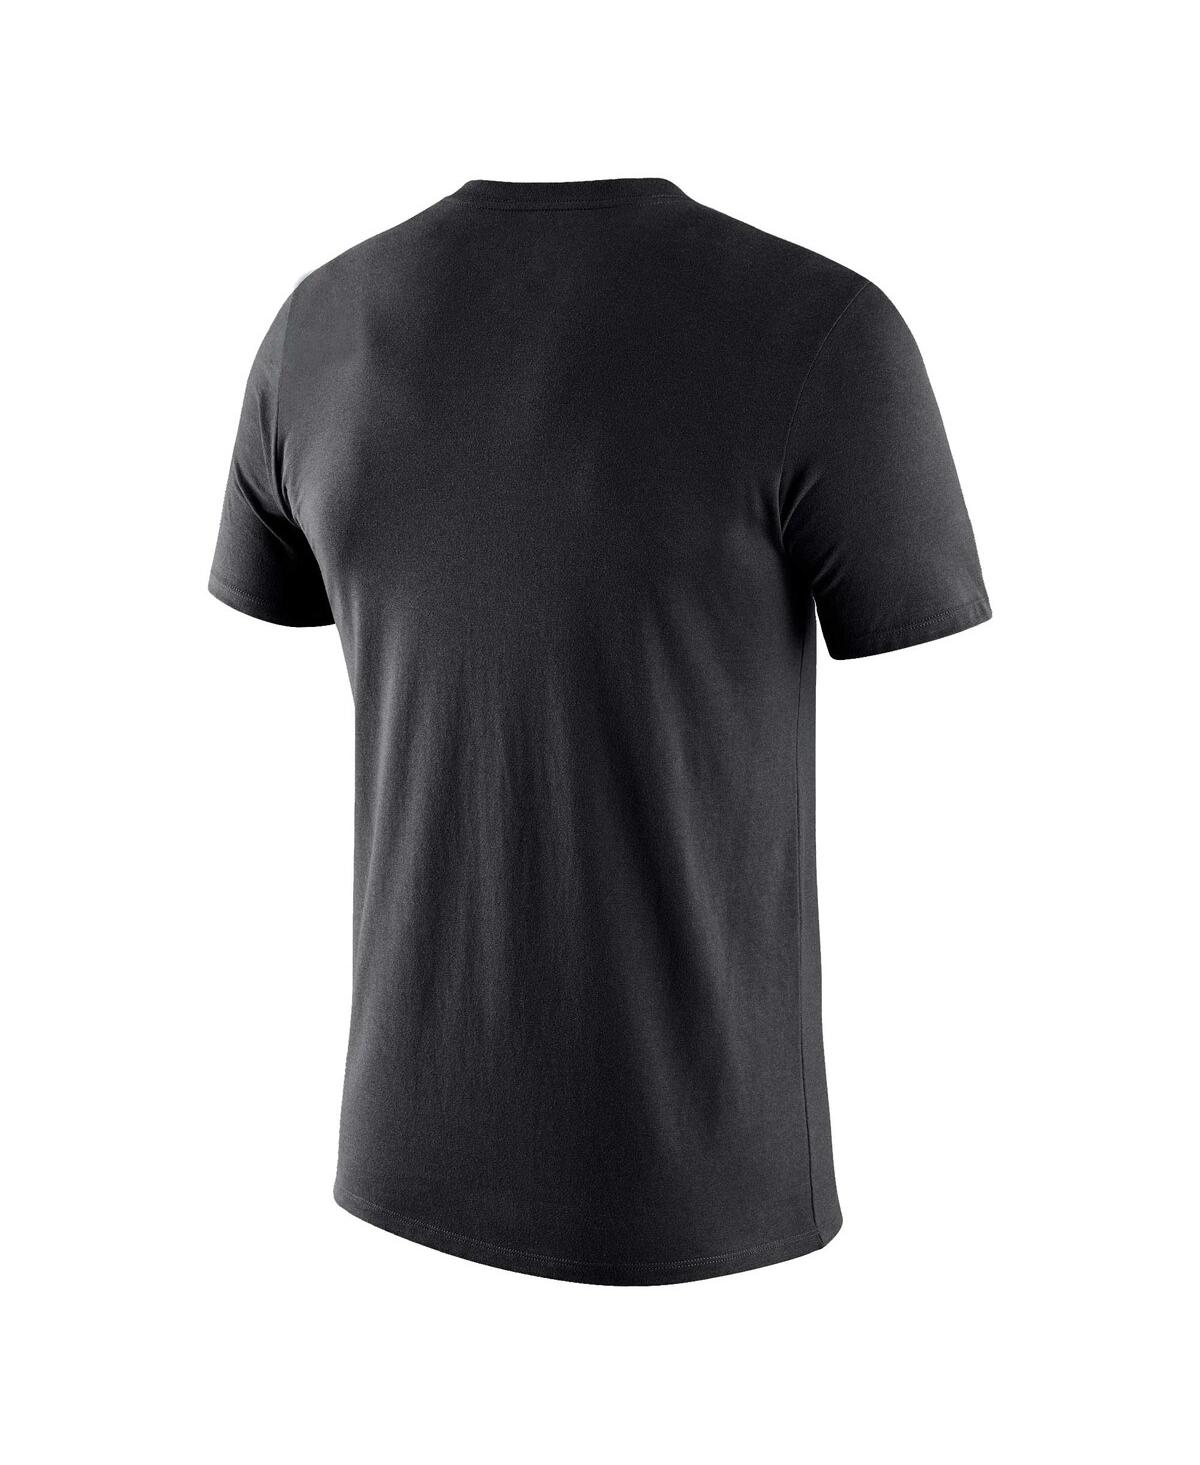 Shop Nike Men's And Women's  Black Los Angeles Sparks Split Logo Performance T-shirt